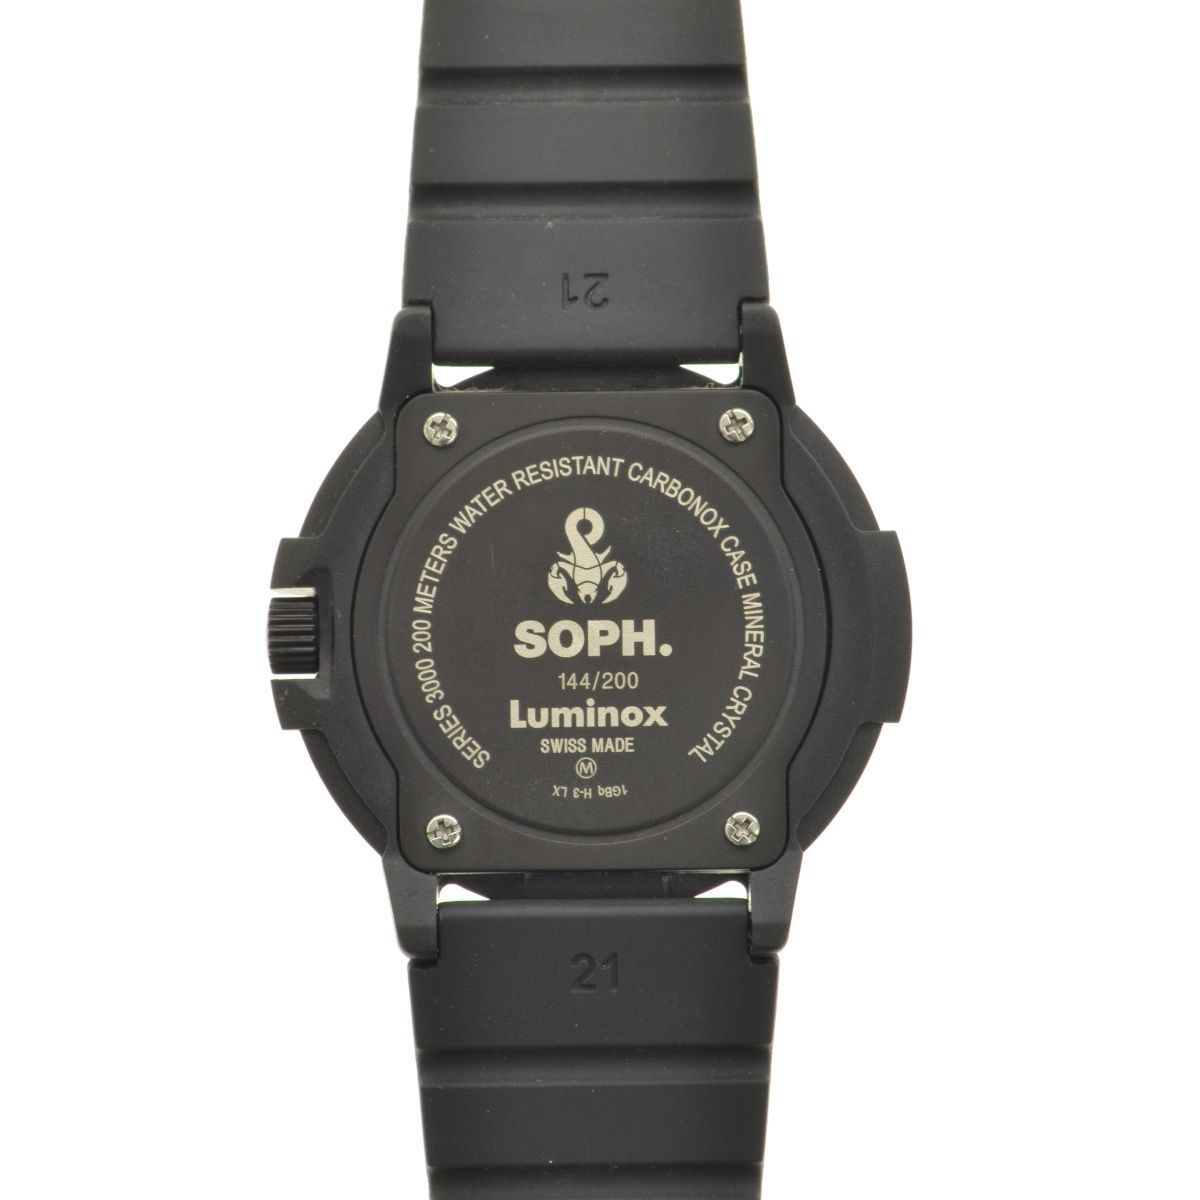 SOPHNET Luminox 3001 SOPH. ルミノックス - 腕時計(アナログ)